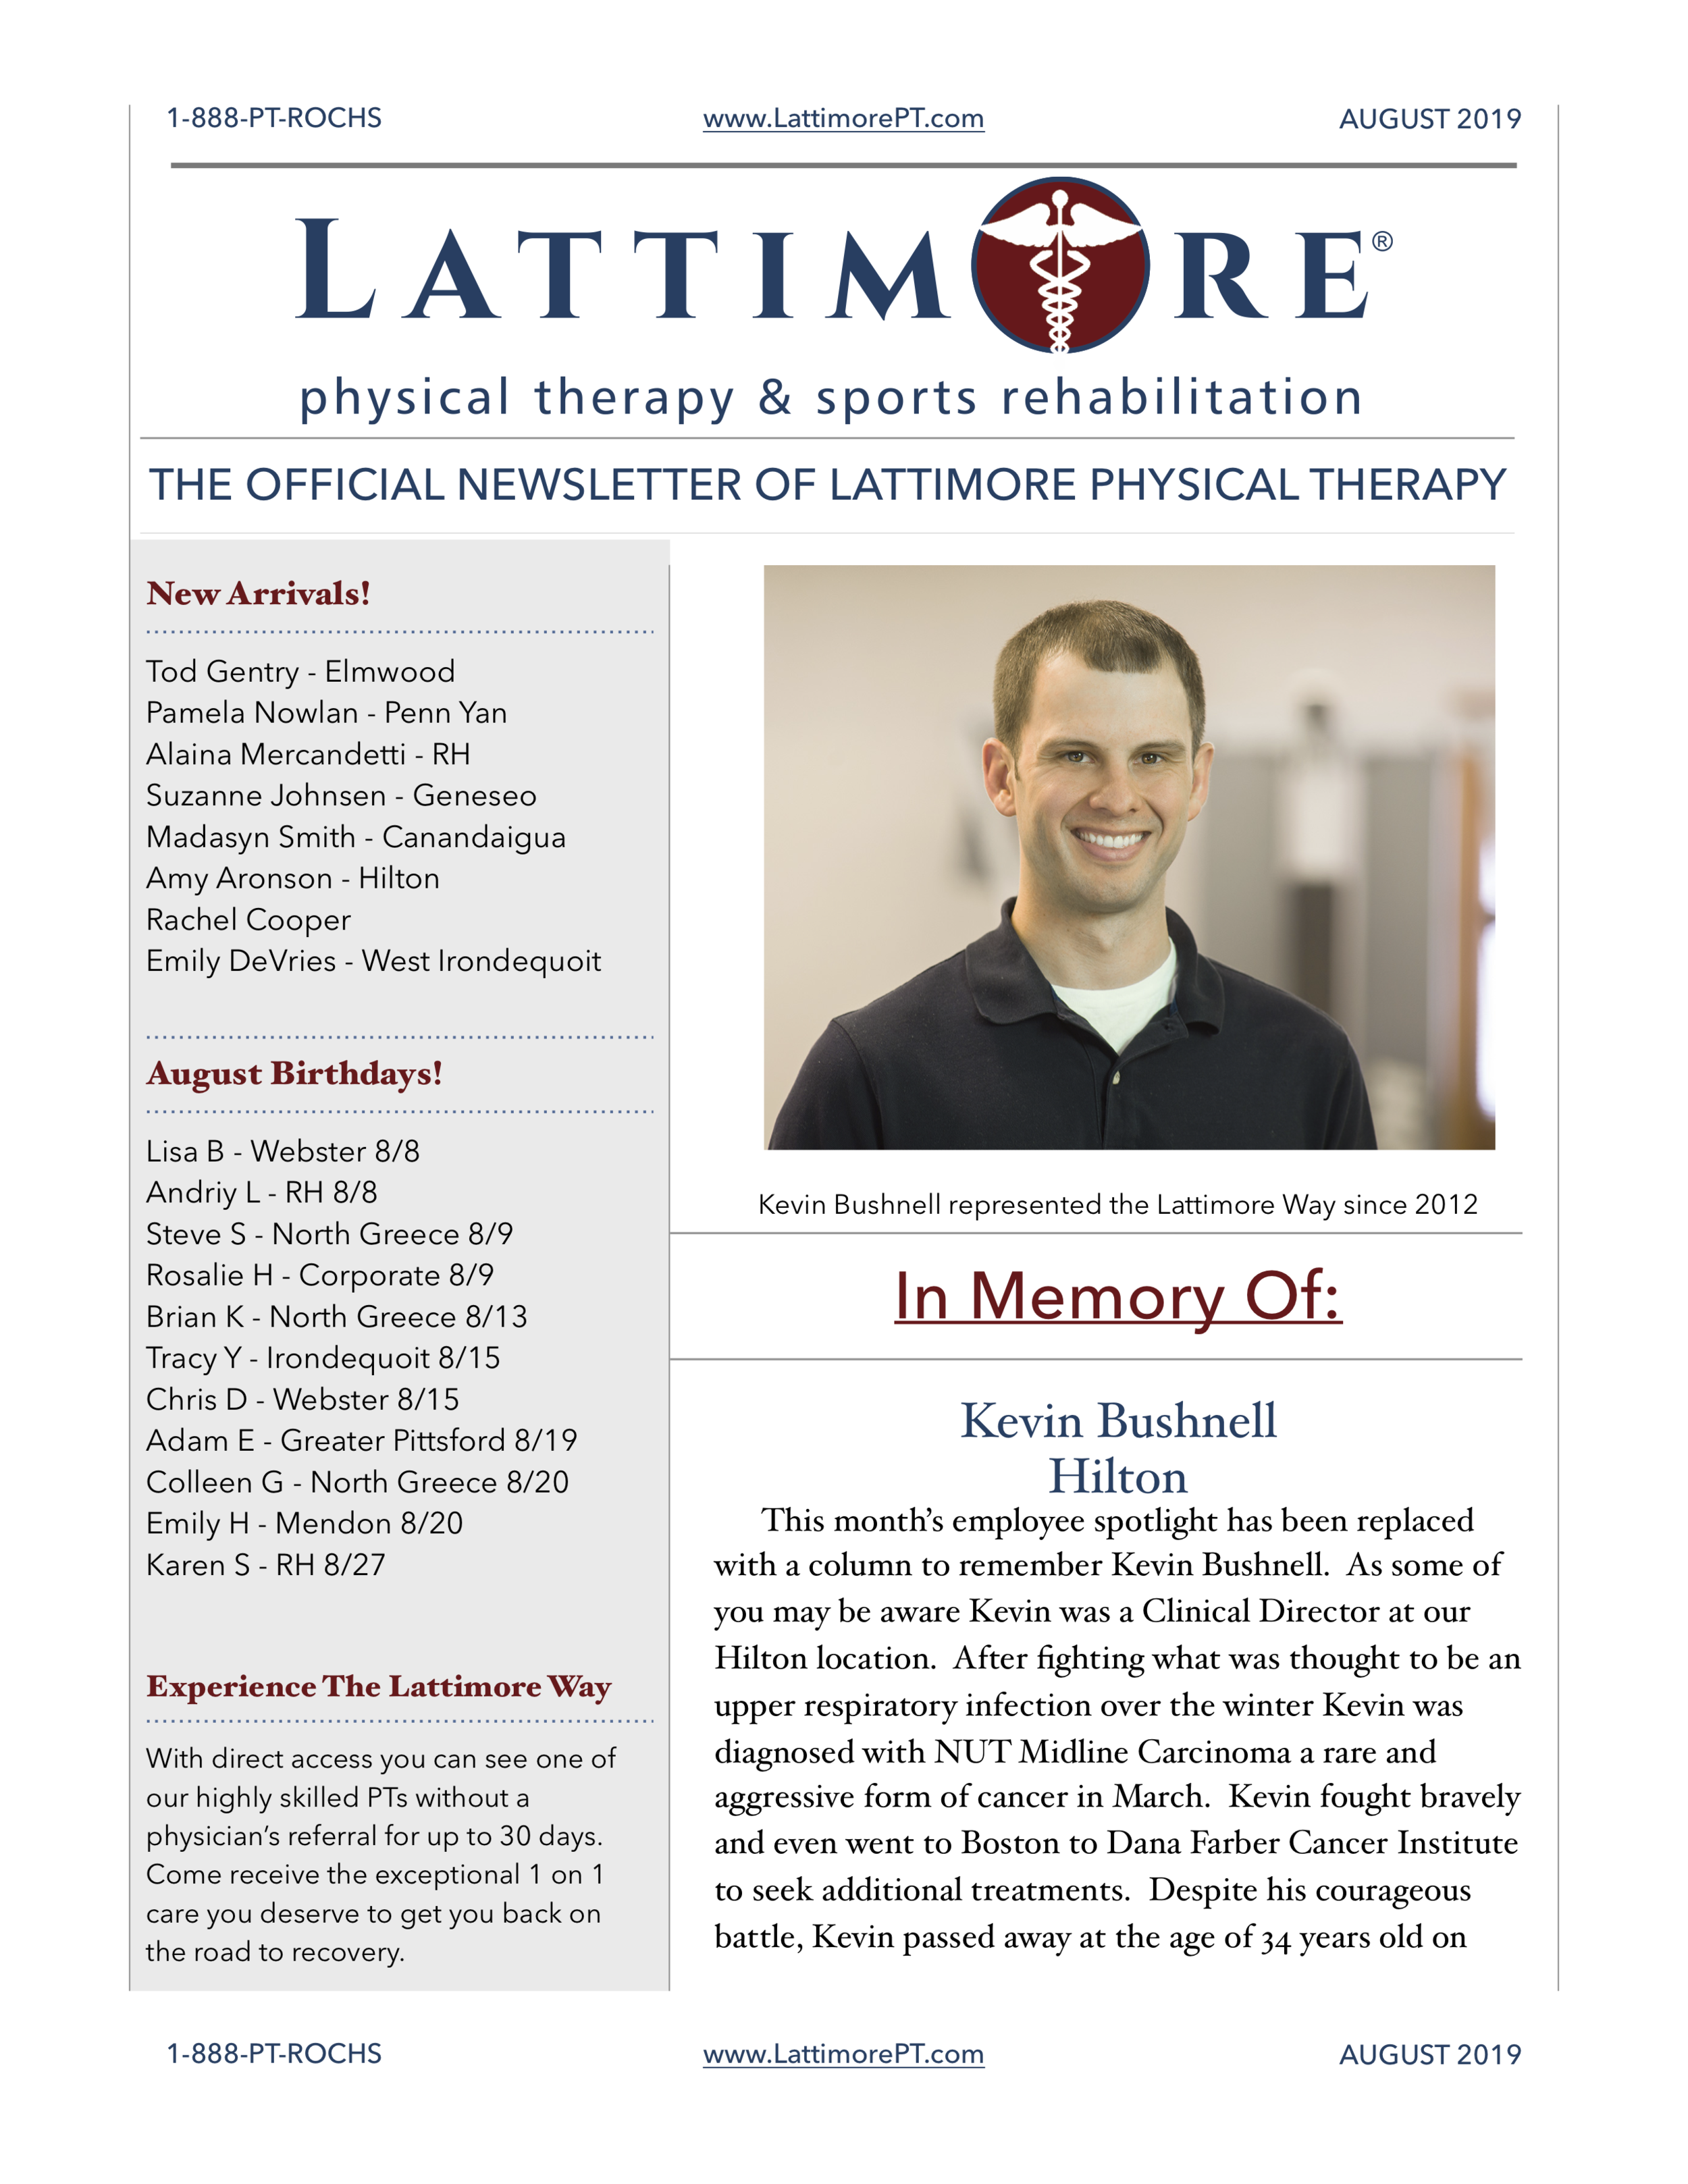 Lattimore Newsletter August 2019.png